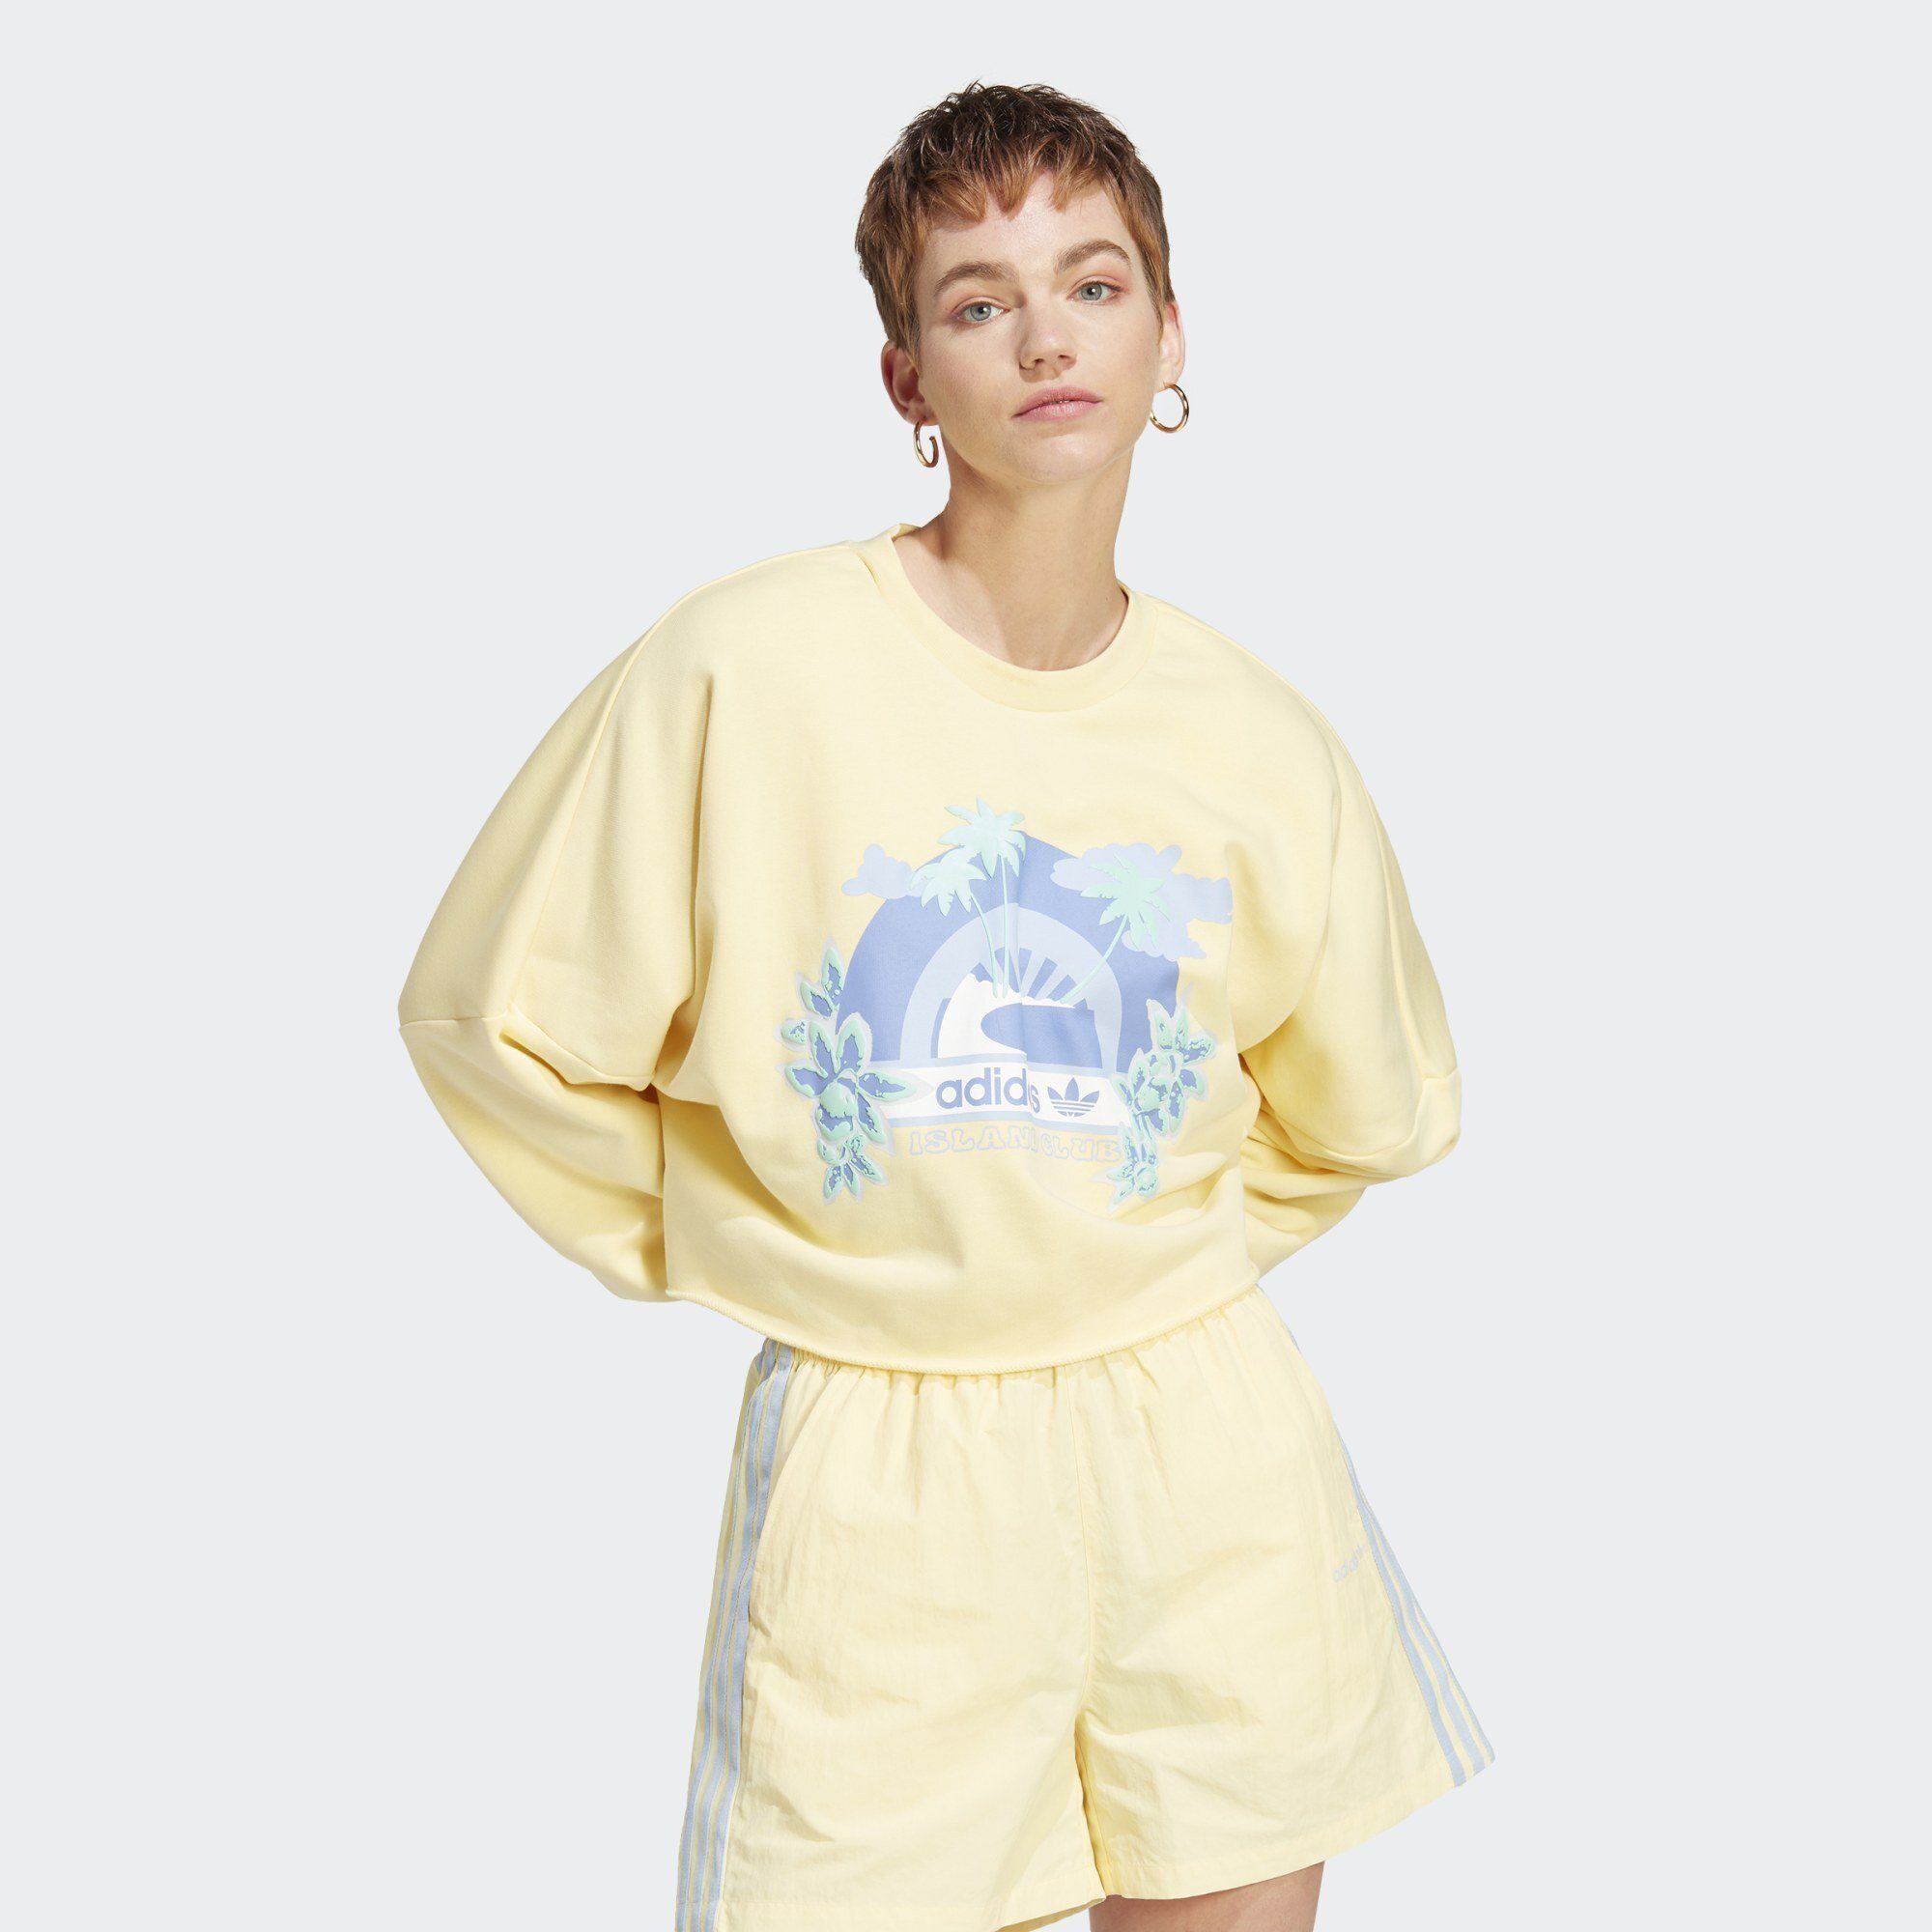 Originals Yellow SWEATSHIRT GRAPHIC adidas Sweatshirt Almost